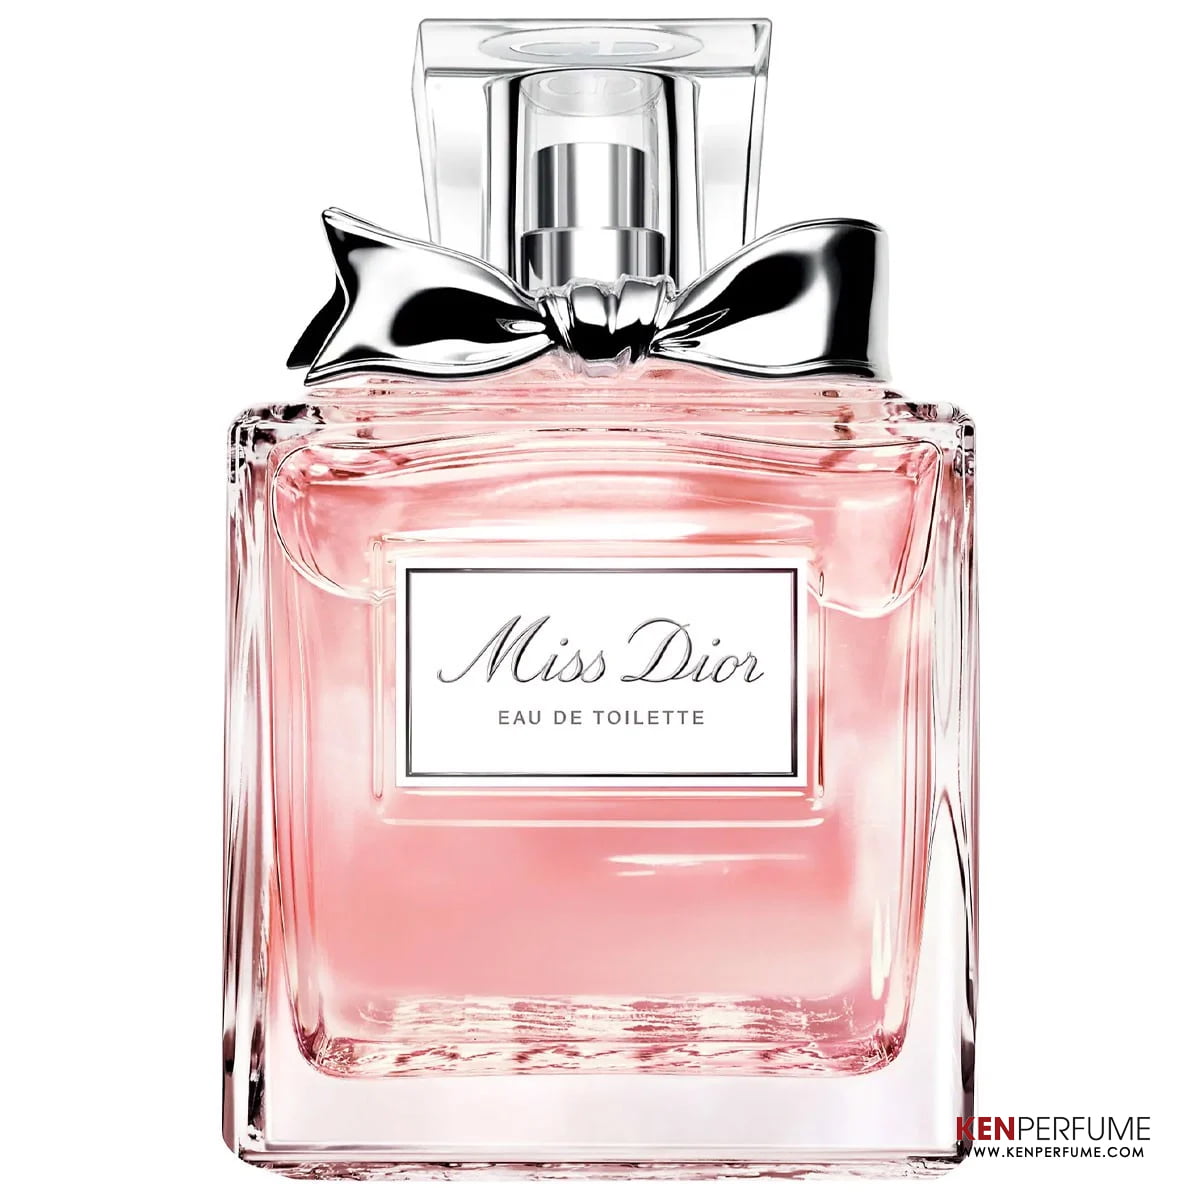 Nước hoa nữ Dior Miss Dior Eau De Parfum  myphamphuthovn